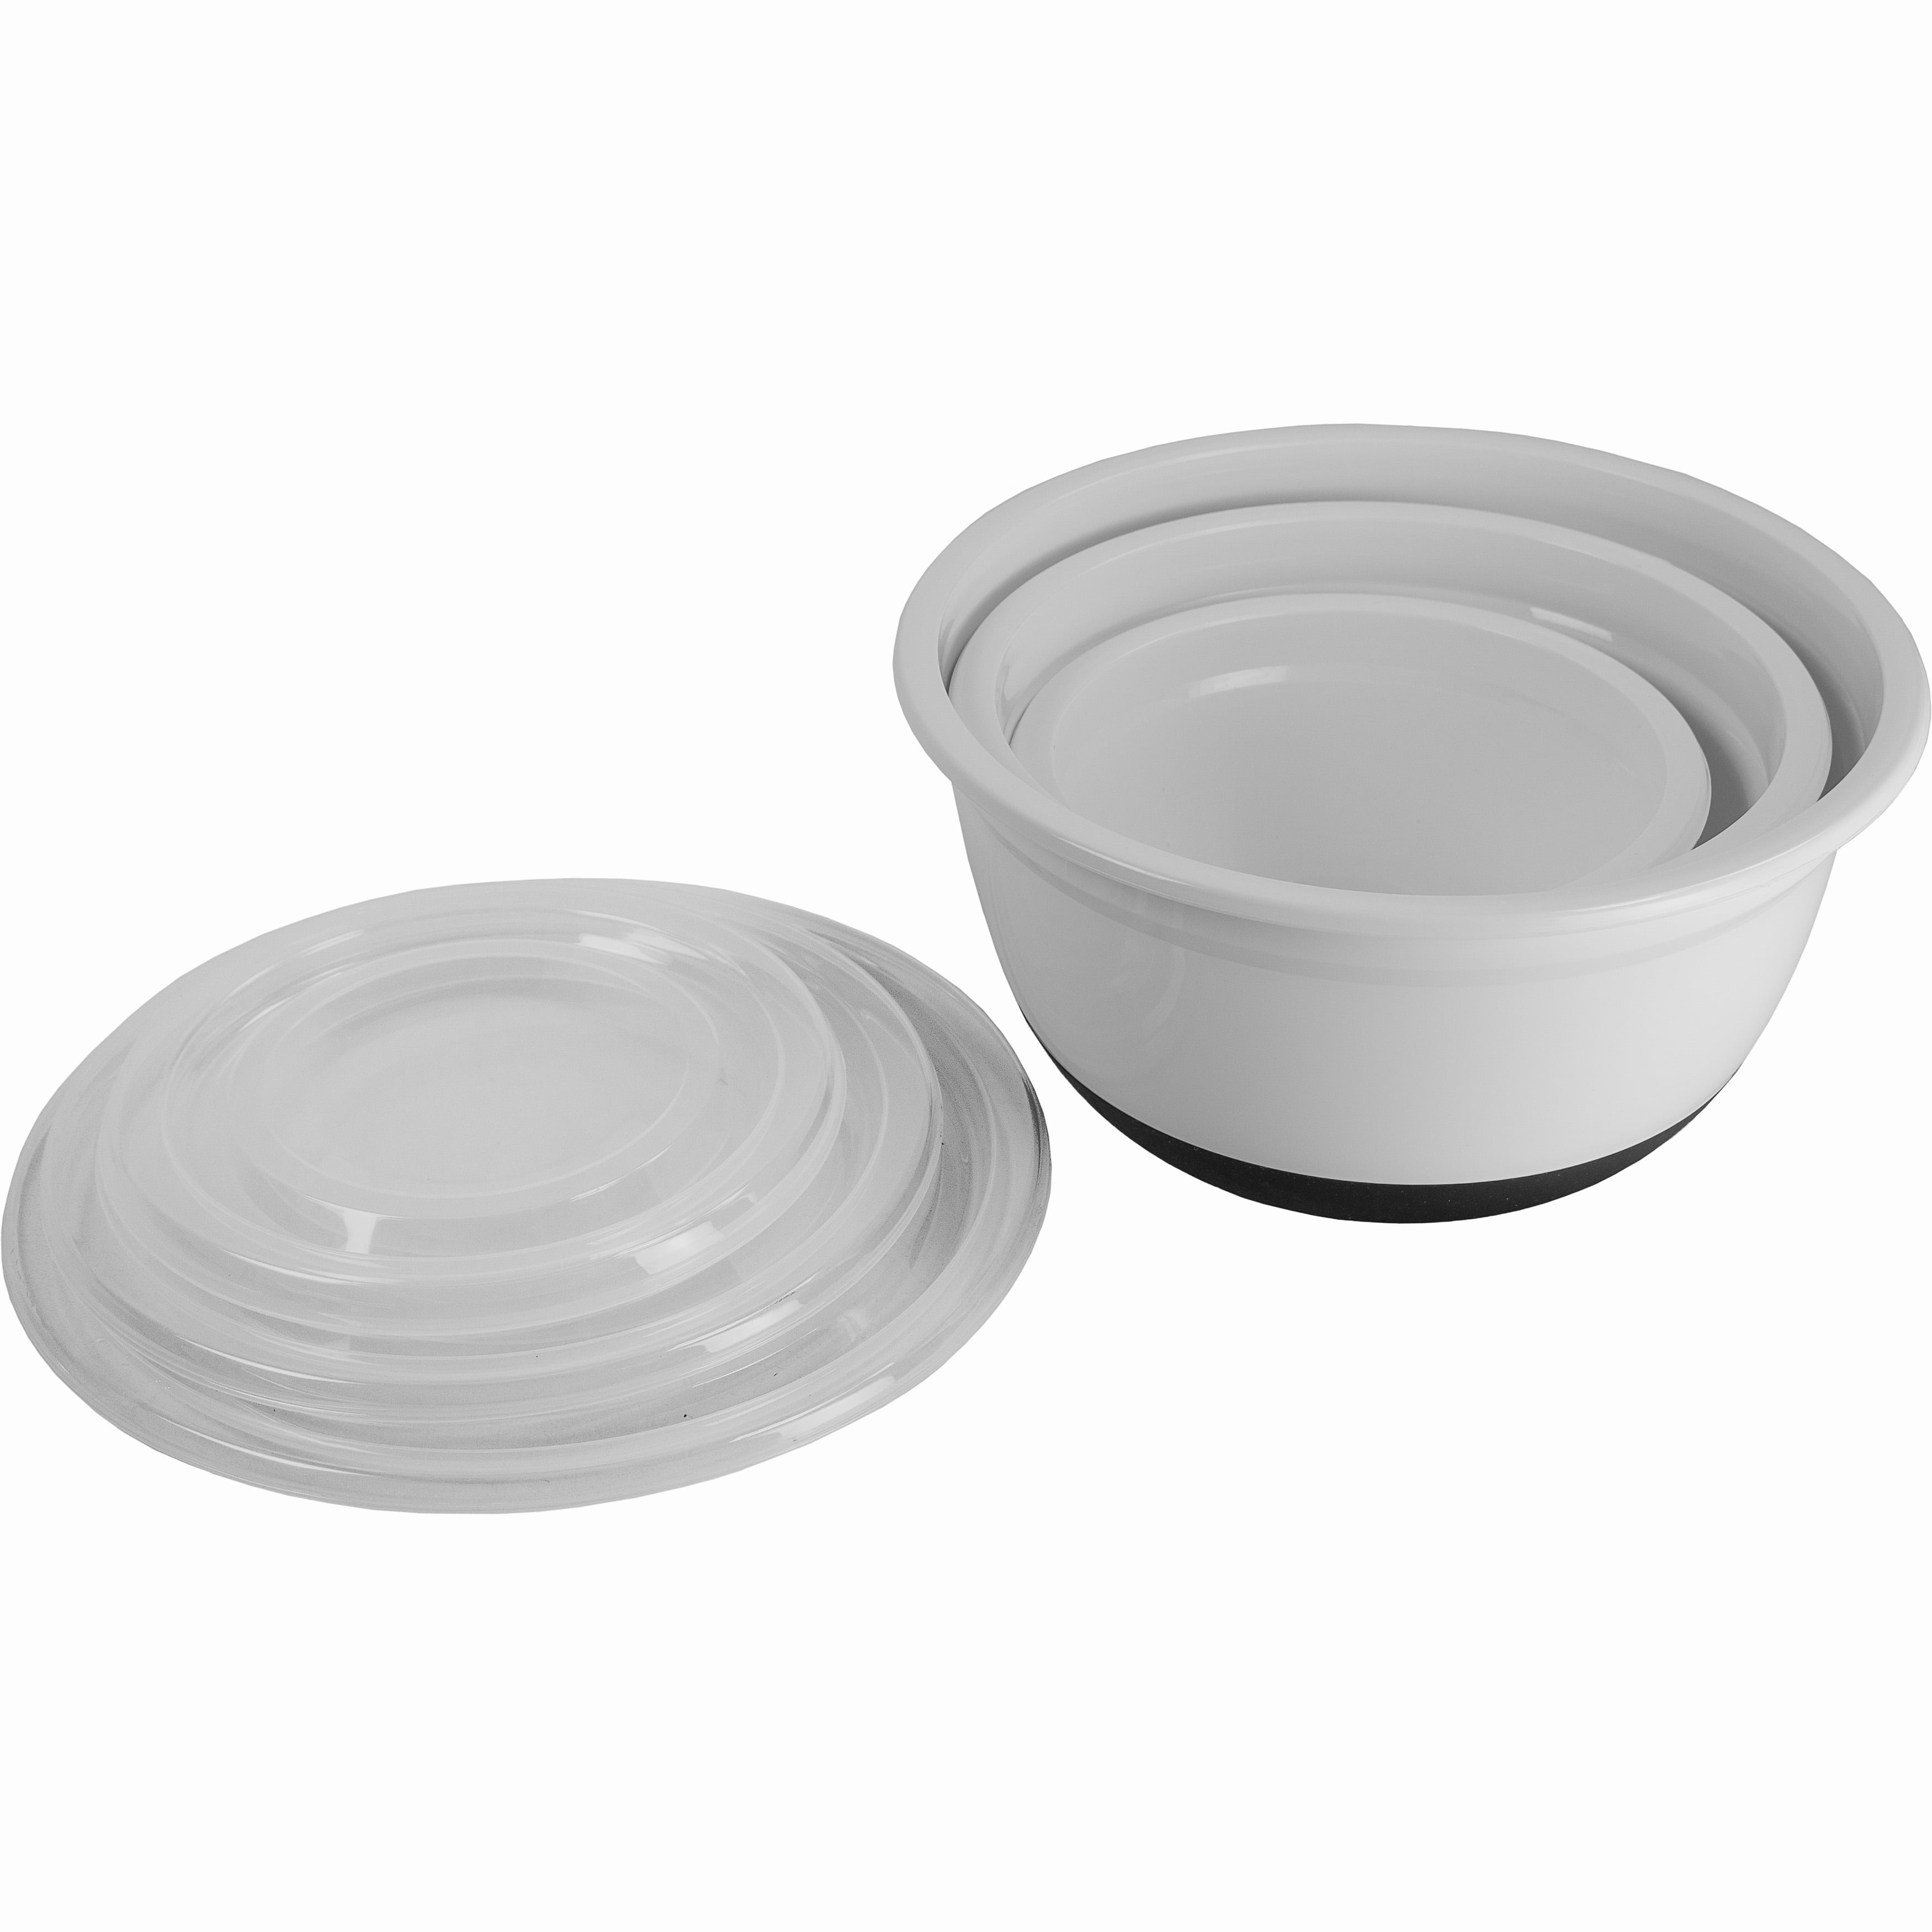 Mainstays 6 Quart Bowl Polypropylene White